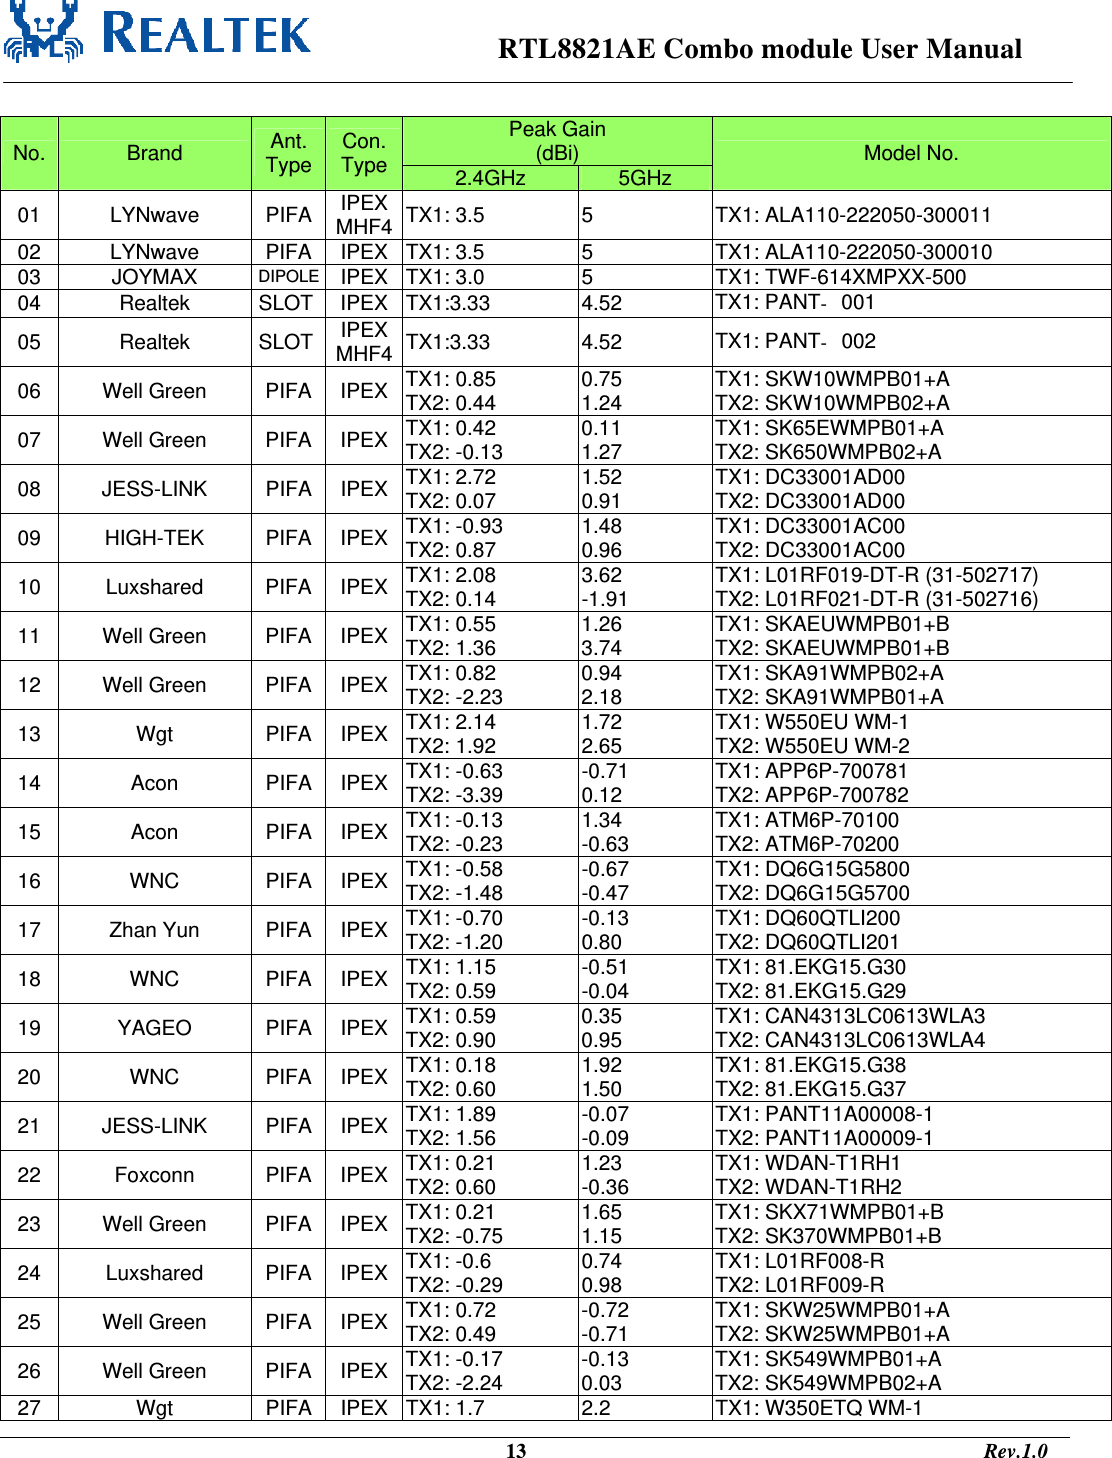                                                                      RTL8821AE Combo module User Manual                                                                                              13                                                                                       Rev.1.0   Peak Gain (dBi) No.  Brand  Ant. Type  Con. Type  2.4GHz  5GHz  Model No. 01 LYNwave PIFA IPEX MHF4  TX1: 3.5  5  TX1: ALA110-222050-300011 02 LYNwave PIFA IPEX TX1: 3.5  5  TX1: ALA110-222050-300010 03 JOYMAX DIPOLE  IPEX  TX1: 3.0  5  TX1: TWF-614XMPXX-500 04 Realtek SLOT  IPEX TX1:3.33  4.52  TX1: PANT001 05 Realtek SLOT  IPEX MHF4  TX1:3.33 4.52 TX1: PANT002 06 Well Green PIFA IPEX TX1: 0.85 TX2: 0.44  0.75 1.24  TX1: SKW10WMPB01+A TX2: SKW10WMPB02+A 07 Well Green PIFA IPEX TX1: 0.42 TX2: -0.13  0.11 1.27  TX1: SK65EWMPB01+A TX2: SK650WMPB02+A 08 JESS-LINK PIFA IPEX TX1: 2.72 TX2: 0.07  1.52 0.91  TX1: DC33001AD00 TX2: DC33001AD00 09 HIGH-TEK PIFA IPEX TX1: -0.93 TX2: 0.87  1.48 0.96  TX1: DC33001AC00 TX2: DC33001AC00 10 Luxshared PIFA IPEX TX1: 2.08 TX2: 0.14  3.62 -1.91  TX1: L01RF019-DT-R (31-502717) TX2: L01RF021-DT-R (31-502716) 11 Well Green PIFA IPEX TX1: 0.55 TX2: 1.36  1.26 3.74  TX1: SKAEUWMPB01+B TX2: SKAEUWMPB01+B 12 Well Green PIFA IPEX TX1: 0.82 TX2: -2.23  0.94 2.18  TX1: SKA91WMPB02+A TX2: SKA91WMPB01+A 13 Wgt PIFA IPEX TX1: 2.14 TX2: 1.92  1.72 2.65  TX1: W550EU WM-1 TX2: W550EU WM-2 14 Acon PIFA IPEX TX1: -0.63 TX2: -3.39  -0.71 0.12  TX1: APP6P-700781 TX2: APP6P-700782 15 Acon PIFA IPEX TX1: -0.13 TX2: -0.23  1.34 -0.63  TX1: ATM6P-70100 TX2: ATM6P-70200 16 WNC PIFA IPEX TX1: -0.58 TX2: -1.48  -0.67 -0.47  TX1: DQ6G15G5800 TX2: DQ6G15G5700 17 Zhan Yun PIFA IPEX TX1: -0.70 TX2: -1.20  -0.13 0.80  TX1: DQ60QTLI200 TX2: DQ60QTLI201 18 WNC PIFA IPEX TX1: 1.15 TX2: 0.59  -0.51 -0.04  TX1: 81.EKG15.G30 TX2: 81.EKG15.G29 19 YAGEO PIFA IPEX TX1: 0.59 TX2: 0.90  0.35 0.95  TX1: CAN4313LC0613WLA3 TX2: CAN4313LC0613WLA4 20 WNC PIFA IPEX TX1: 0.18 TX2: 0.60  1.92 1.50  TX1: 81.EKG15.G38 TX2: 81.EKG15.G37 21 JESS-LINK PIFA IPEX TX1: 1.89 TX2: 1.56  -0.07 -0.09  TX1: PANT11A00008-1 TX2: PANT11A00009-1 22 Foxconn PIFA IPEX TX1: 0.21 TX2: 0.60  1.23 -0.36  TX1: WDAN-T1RH1 TX2: WDAN-T1RH2 23 Well Green PIFA IPEX TX1: 0.21 TX2: -0.75  1.65 1.15  TX1: SKX71WMPB01+B TX2: SK370WMPB01+B 24 Luxshared PIFA IPEX TX1: -0.6 TX2: -0.29  0.74 0.98  TX1: L01RF008-R TX2: L01RF009-R 25 Well Green PIFA IPEX TX1: 0.72 TX2: 0.49  -0.72 -0.71  TX1: SKW25WMPB01+A TX2: SKW25WMPB01+A 26 Well Green PIFA IPEX TX1: -0.17 TX2: -2.24  -0.13 0.03  TX1: SK549WMPB01+A TX2: SK549WMPB02+A 27  Wgt  PIFA  IPEX  TX1: 1.7  2.2  TX1: W350ETQ WM-1 